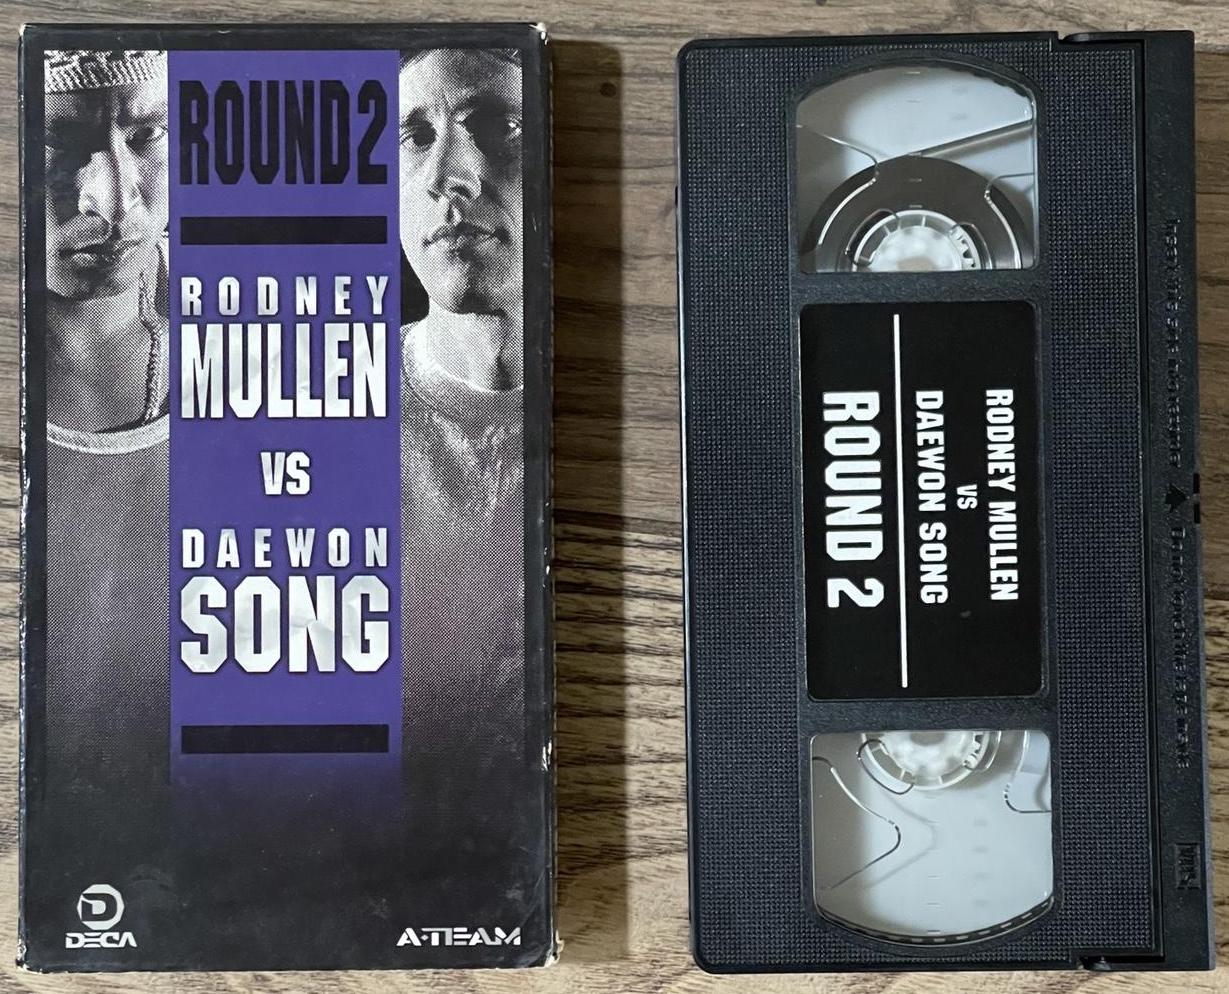 Rodney Mullen vs Daewon Song: Round 2 cover